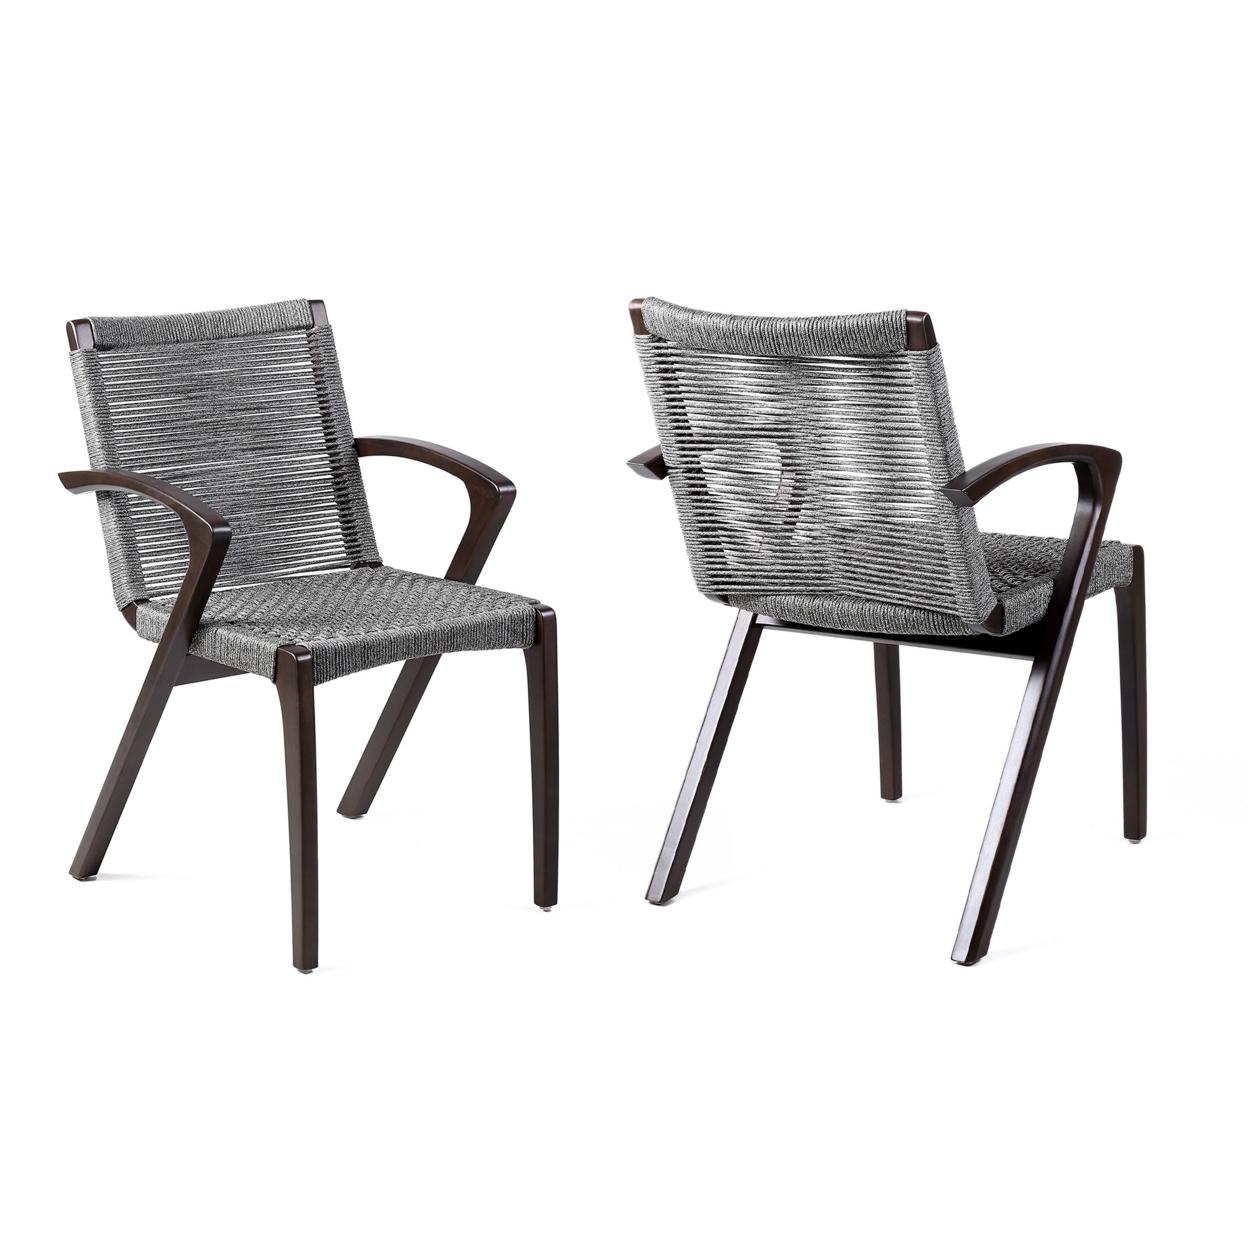 Ivan 22 Inch Dining Chair, Set Of 2, Light Brown Eucalyptus Wood, Gray Rope- Saltoro Sherpi